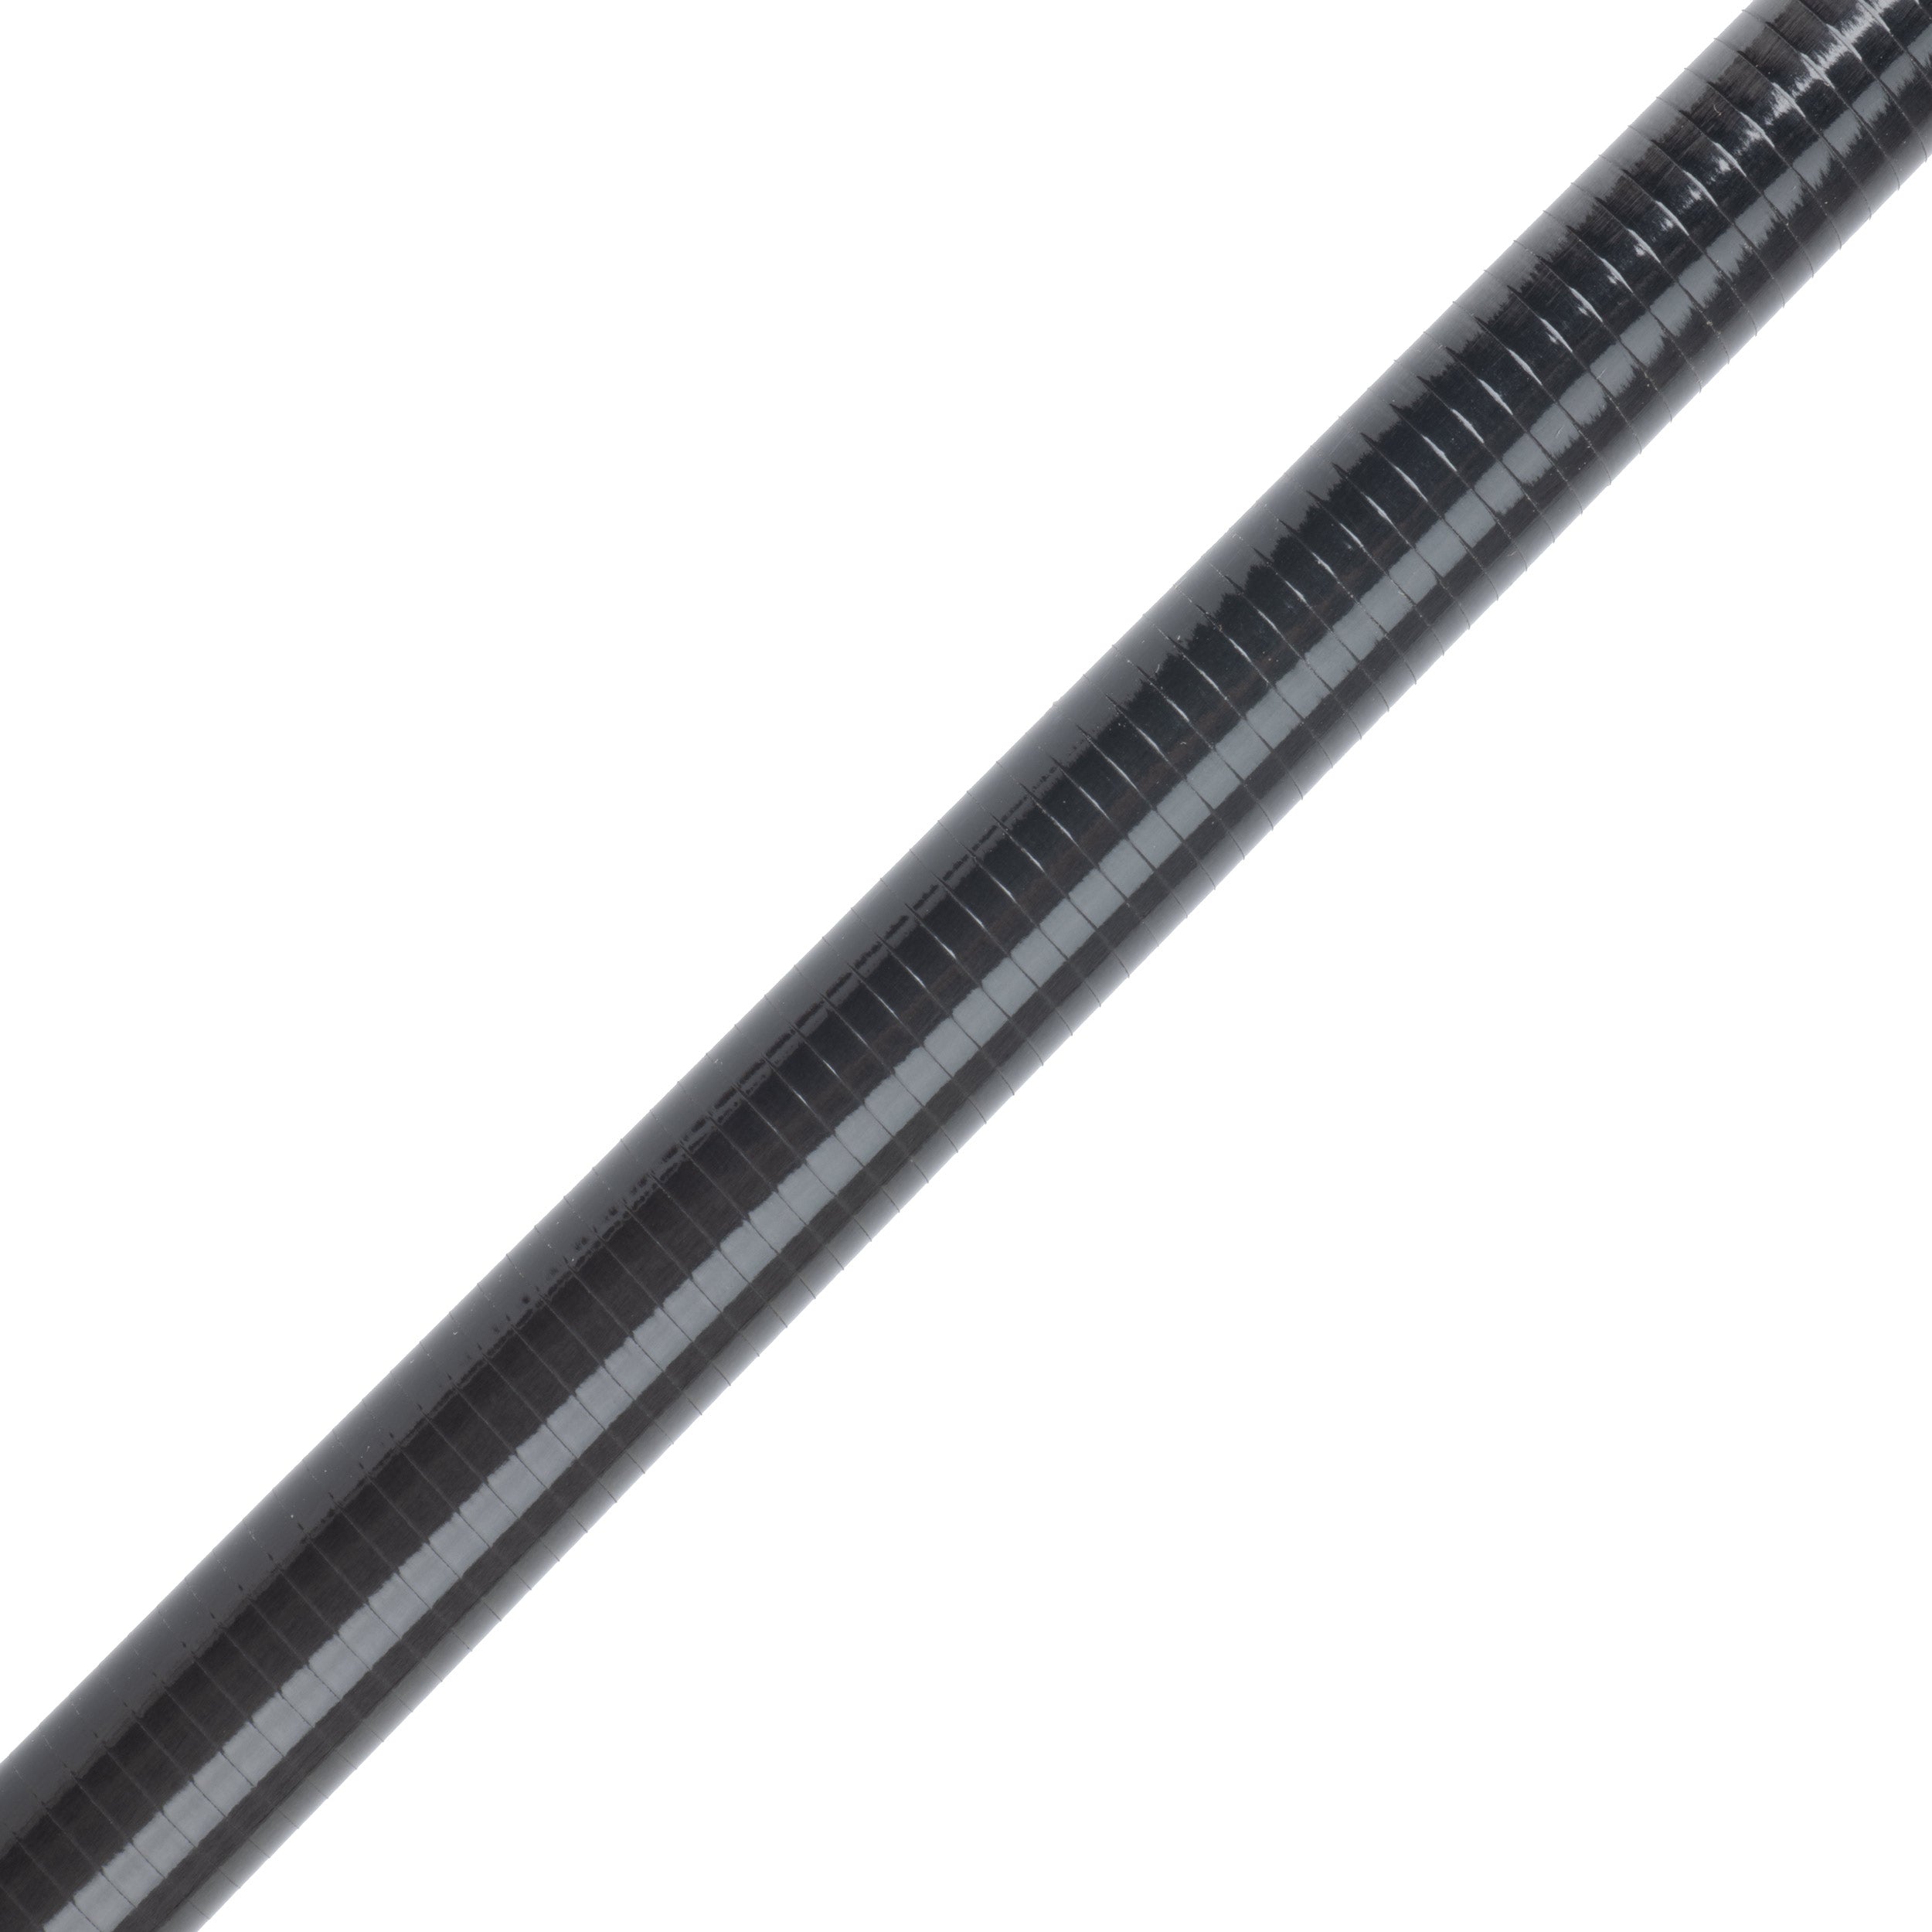 Cashion CR6r Carbon Fiber Swimbait Rod Blank - CR6r-iSWB943